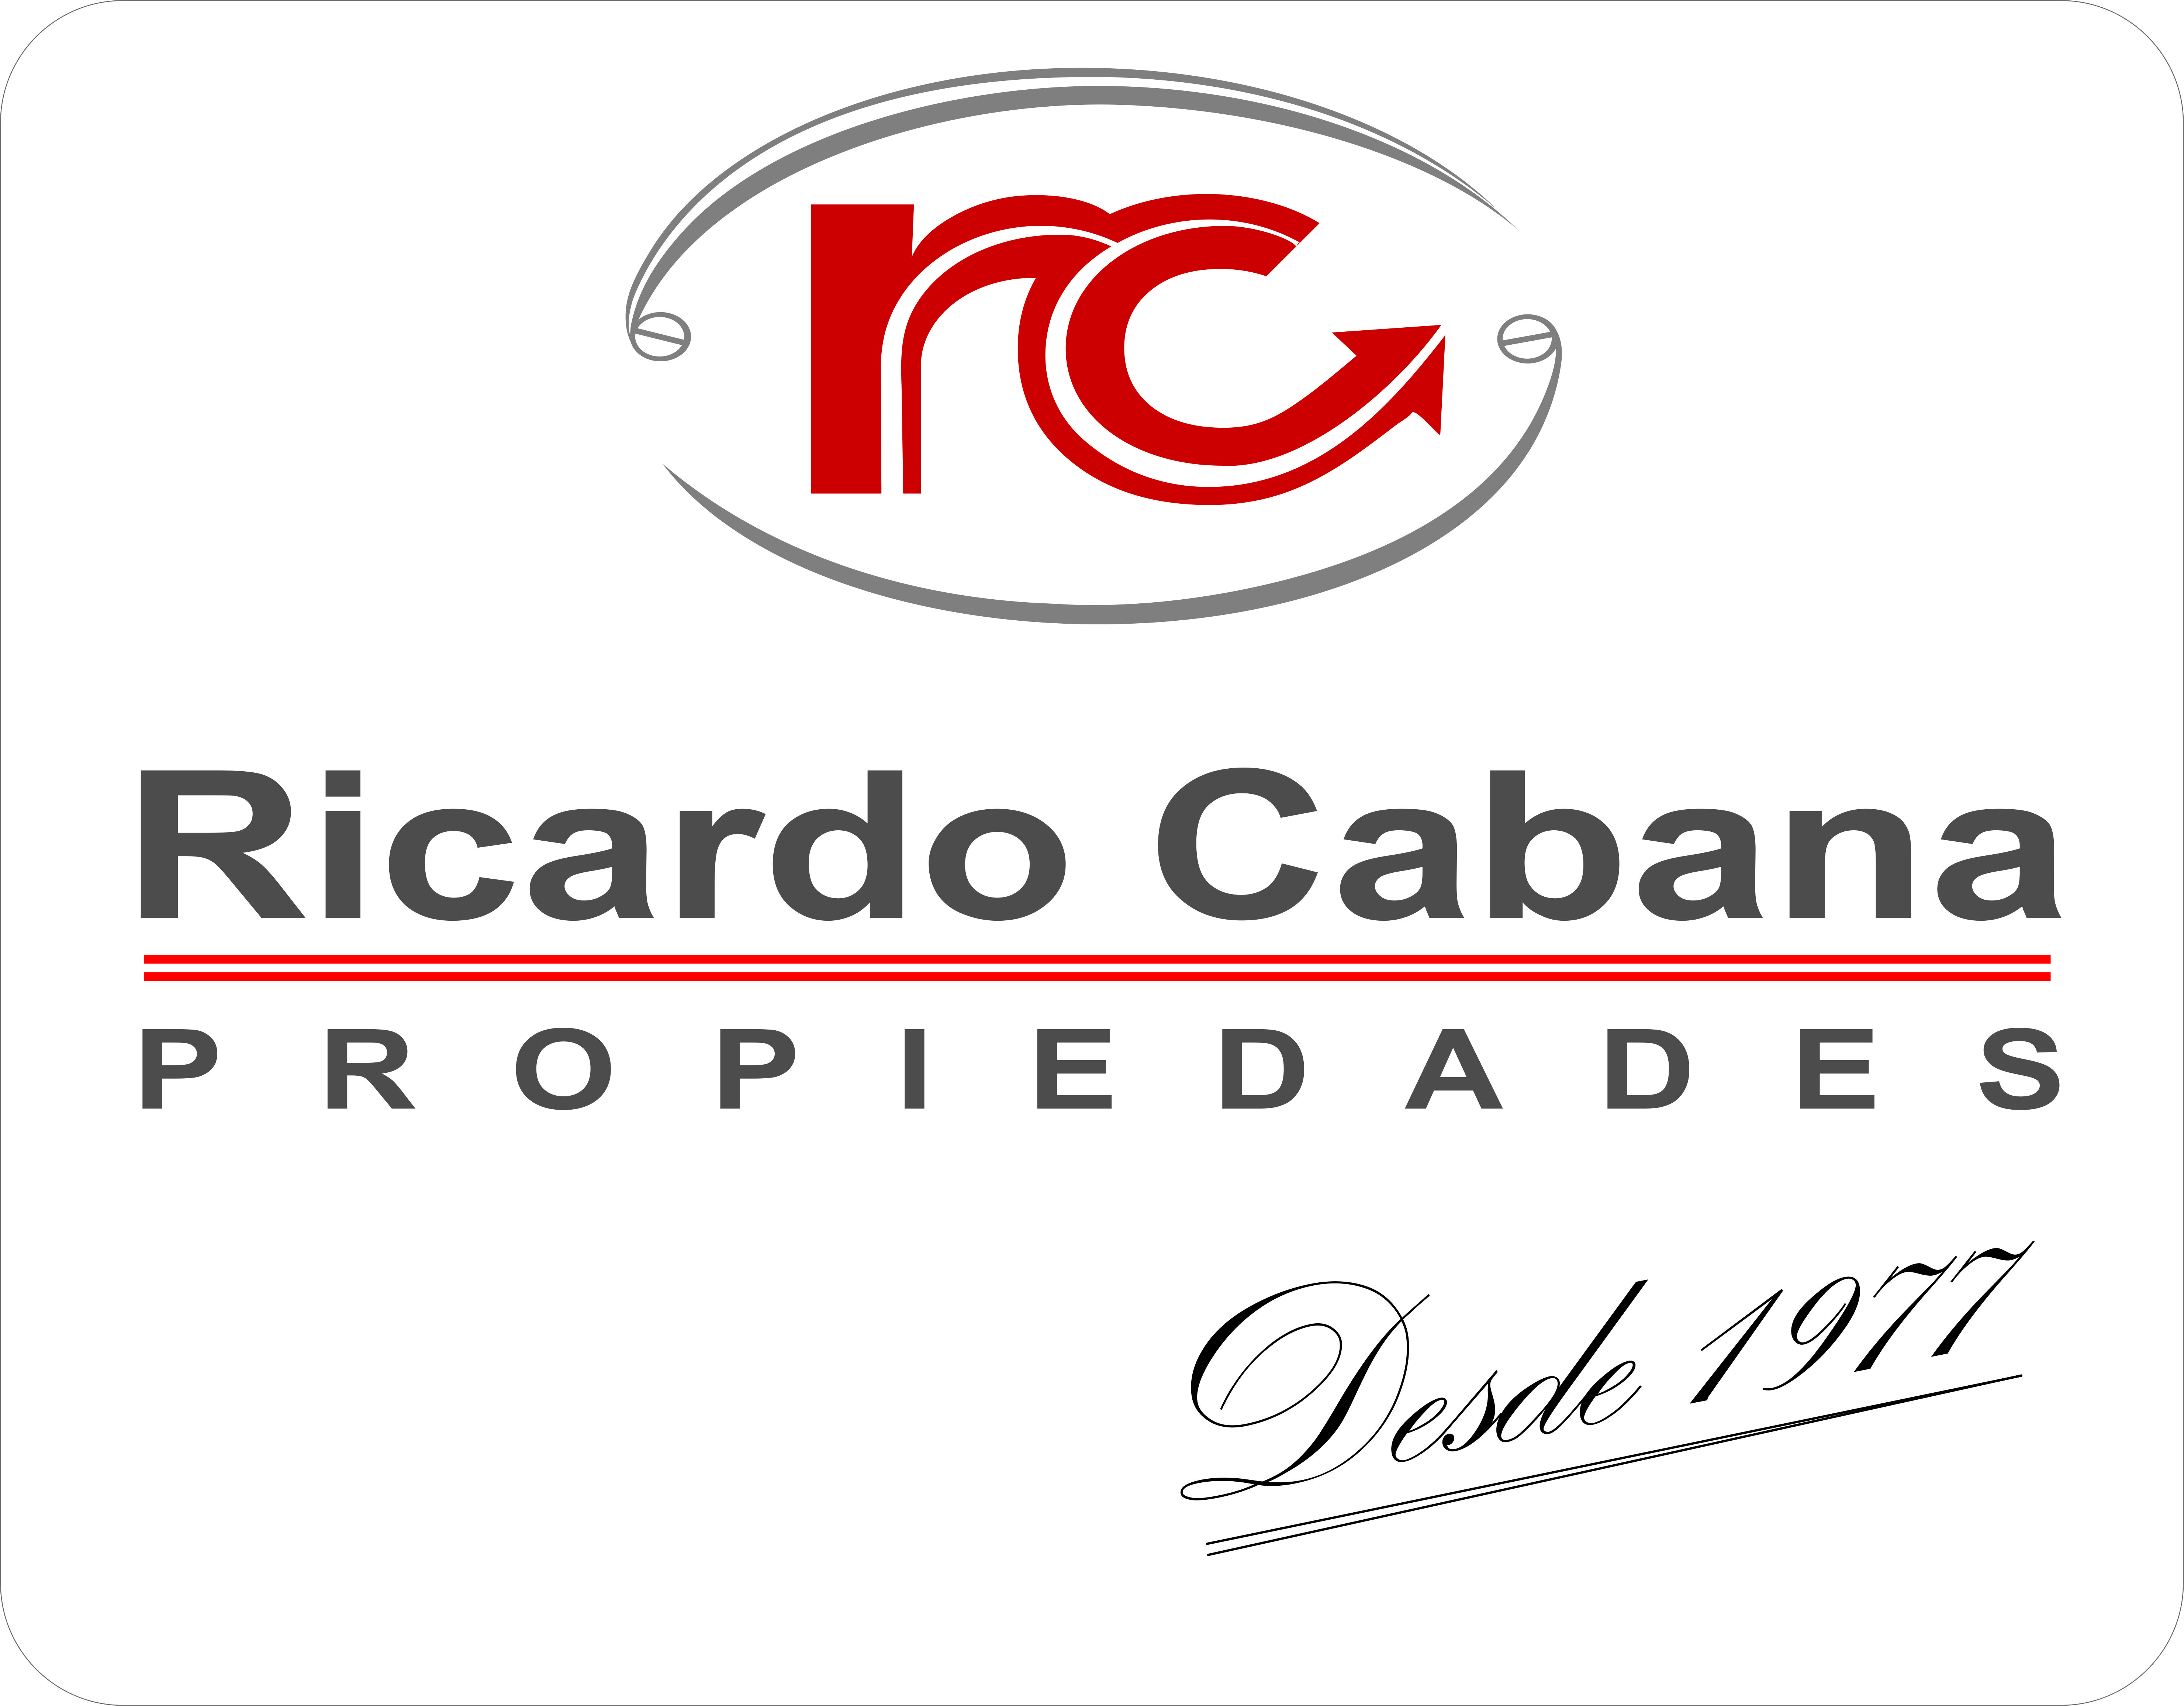 Ricardo Cabana Propiedades